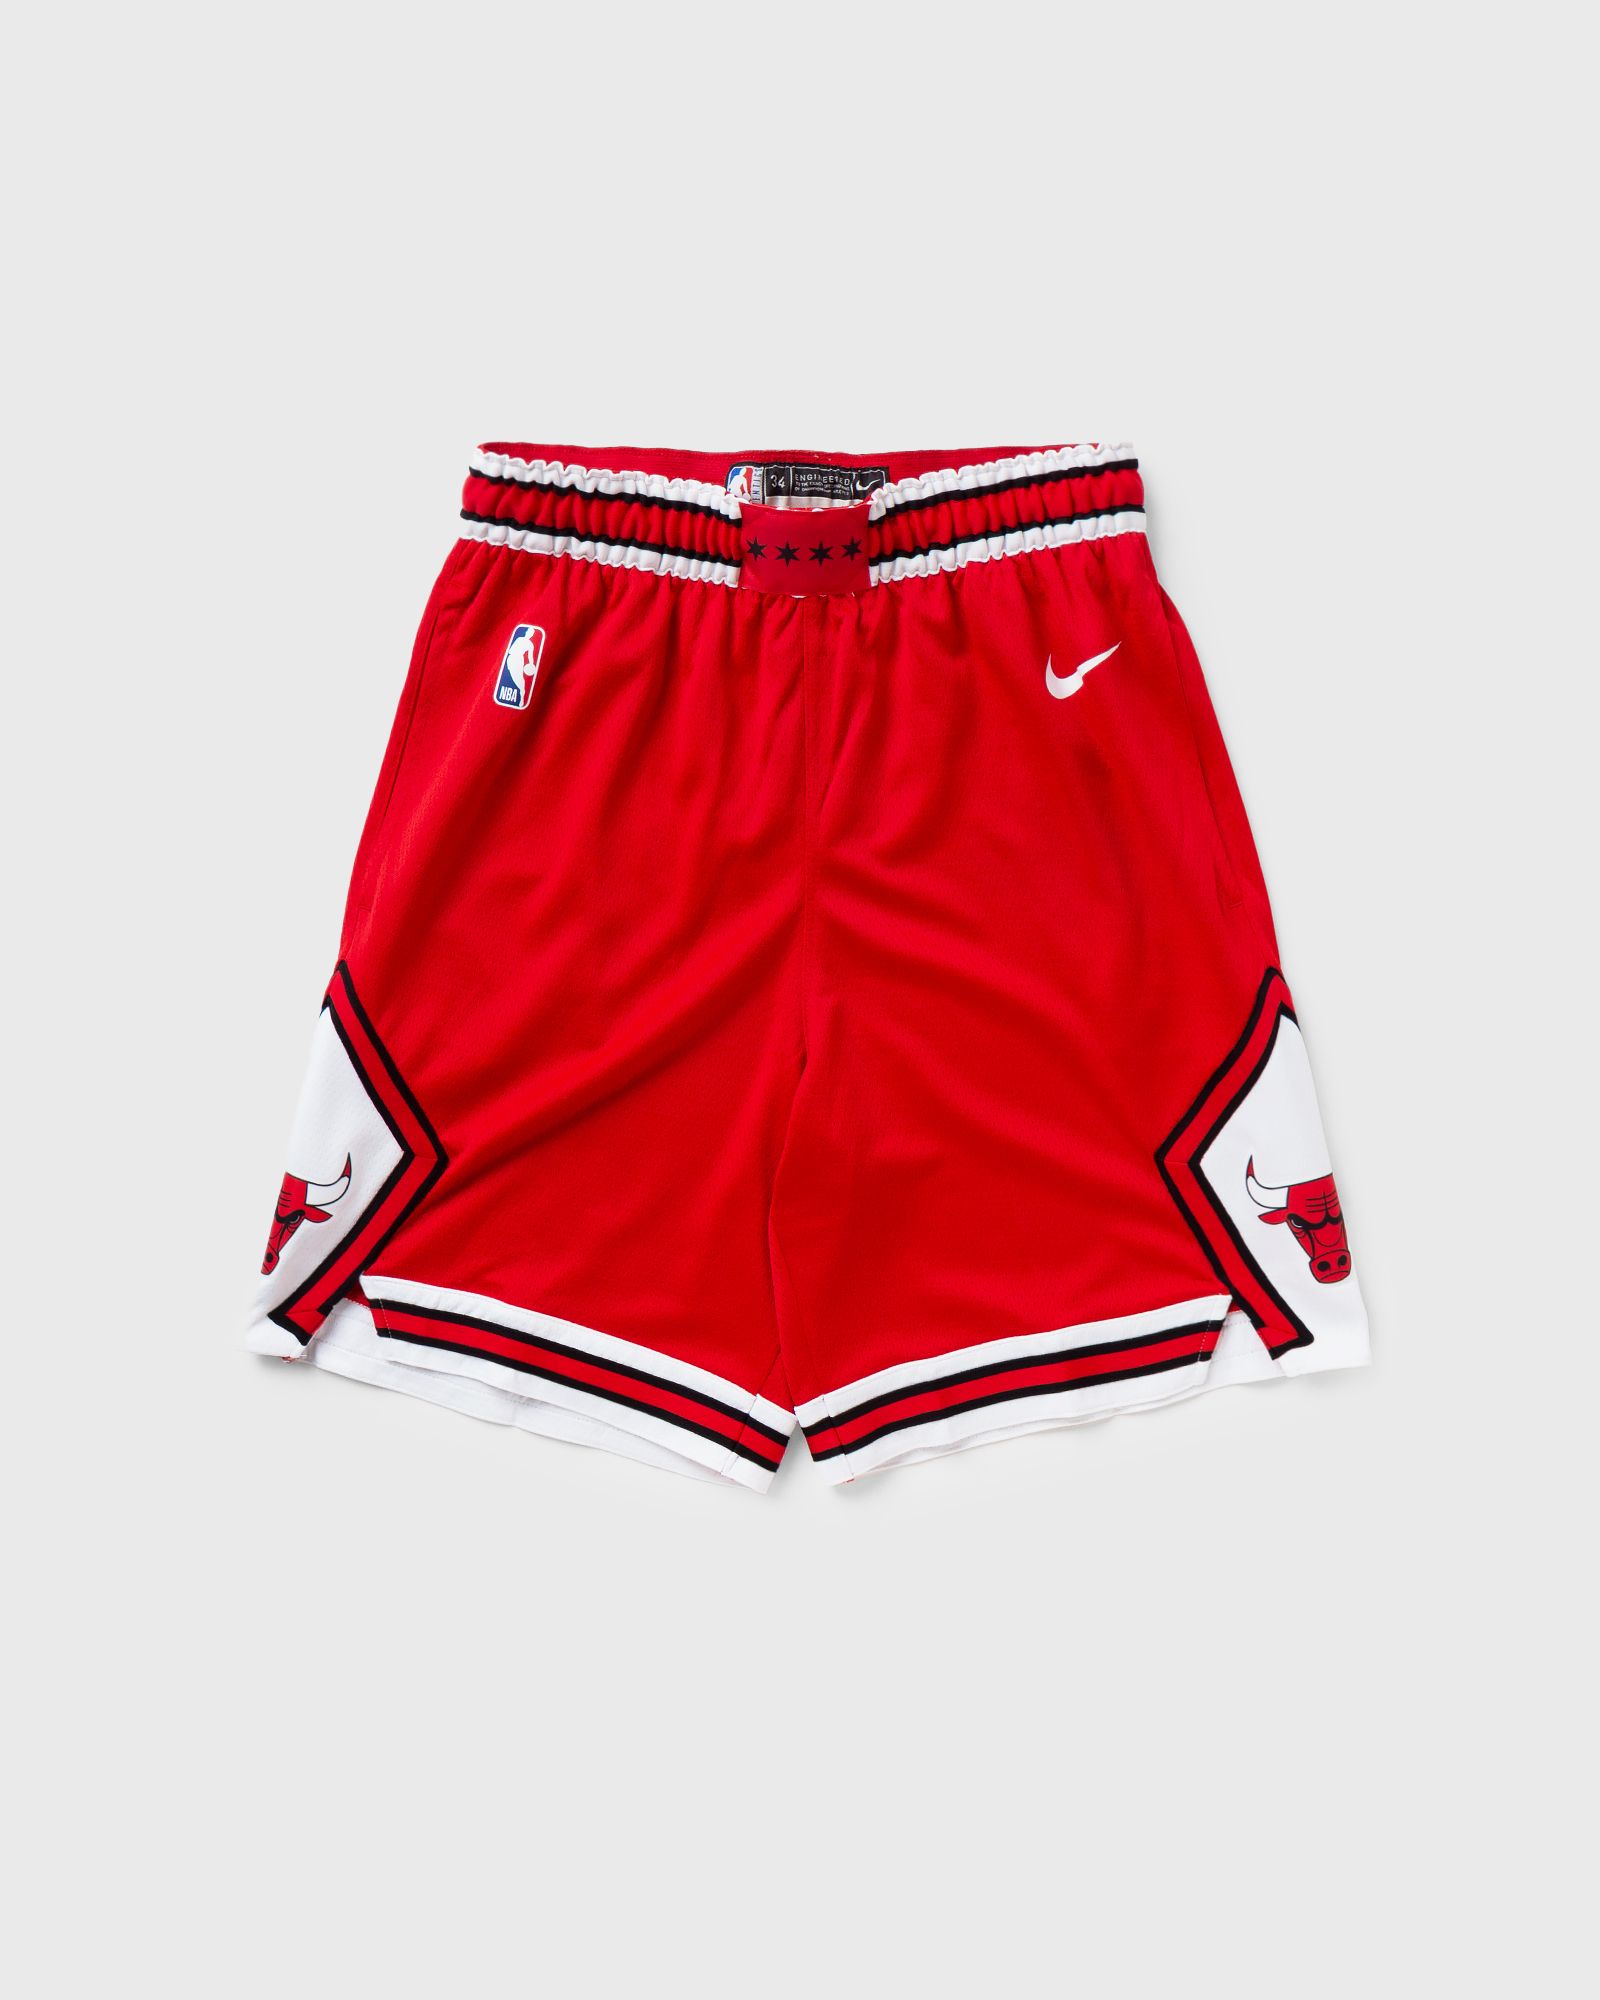 Nike - chicago bulls nba swingman shorts men sport & team shorts red in größe:xxl